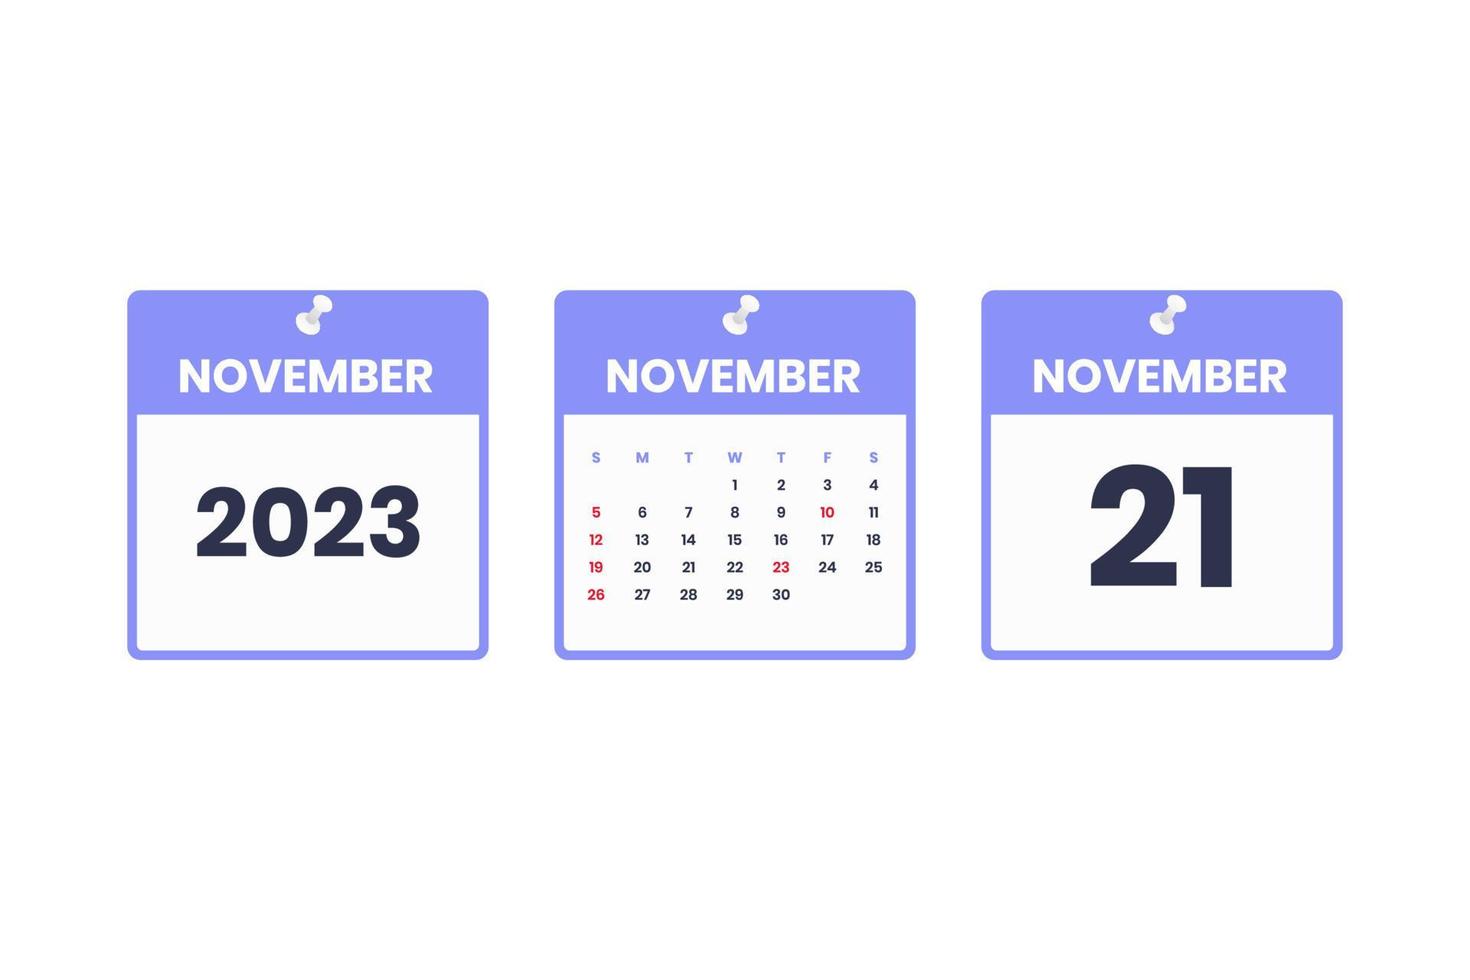 November calendar design. November 21 2023 calendar icon for schedule, appointment, important date concept vector